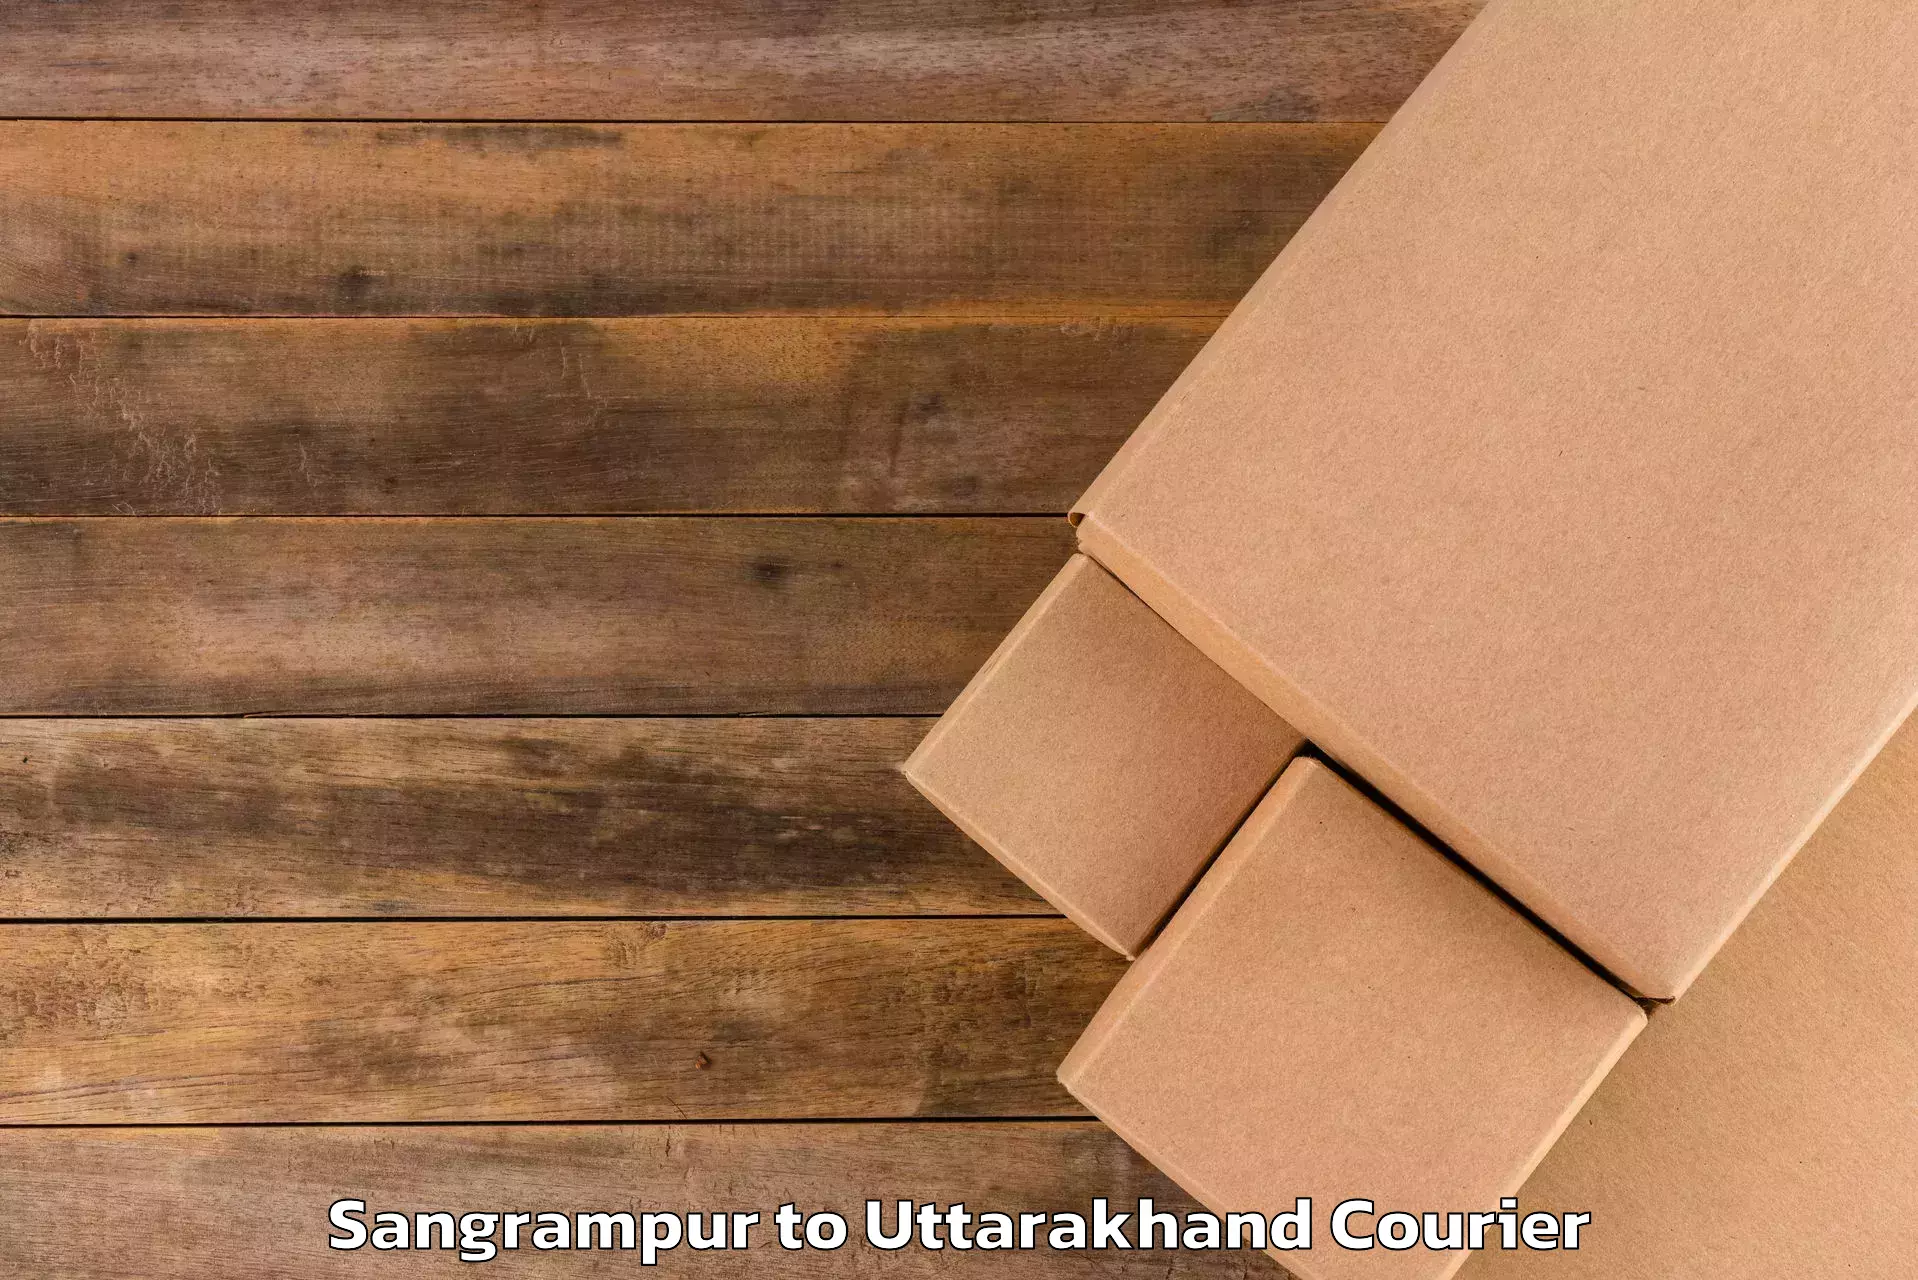 Baggage transport technology Sangrampur to Uttarakhand